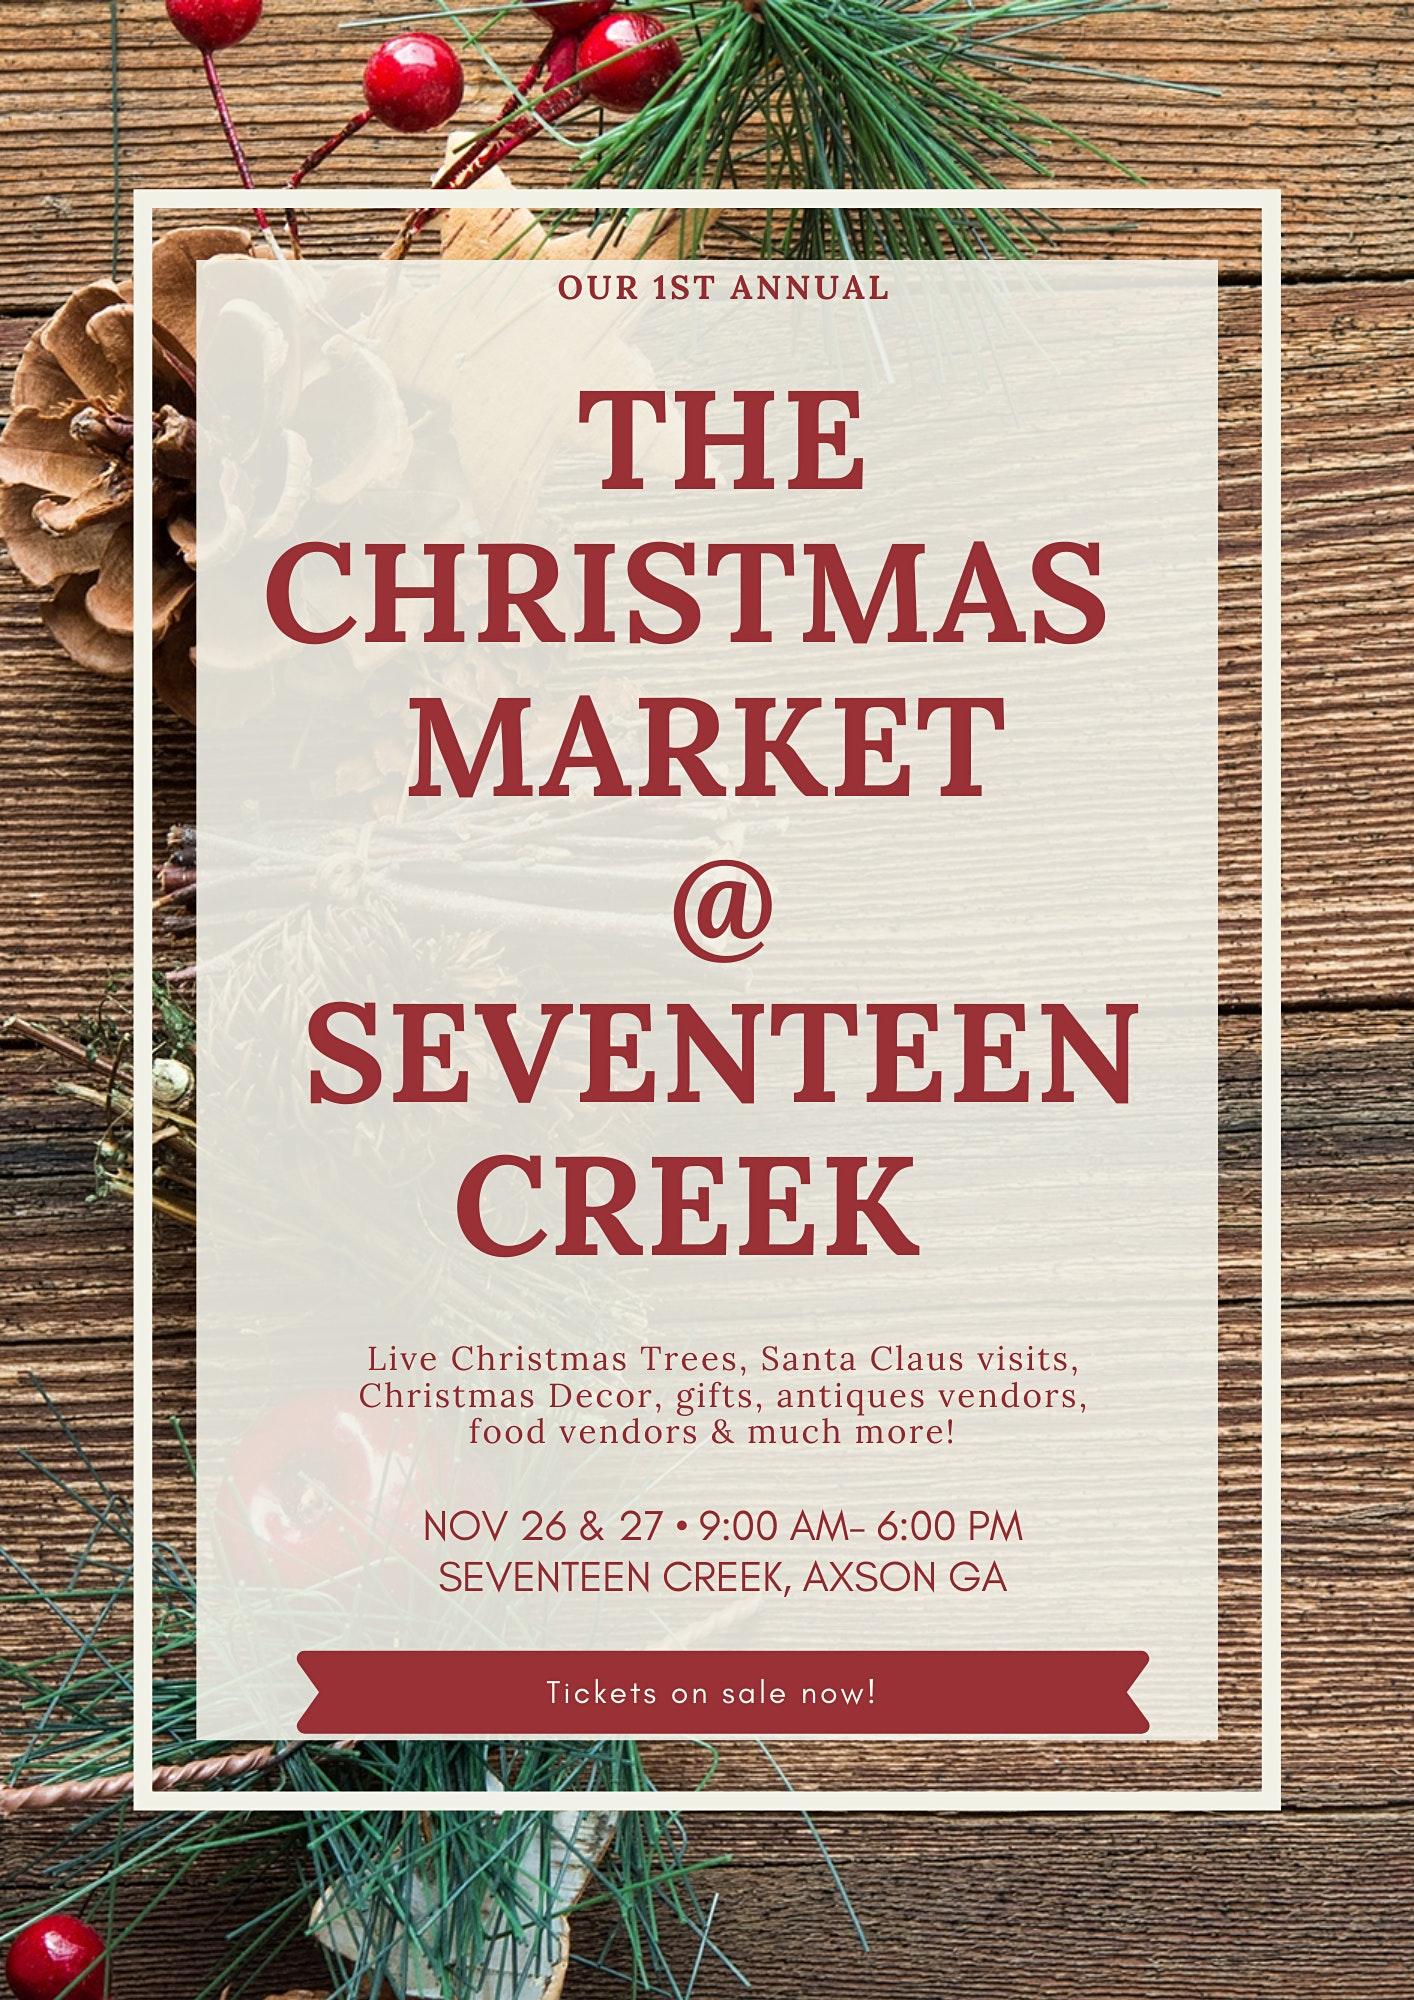 The Christmas Market at Seventeen Creek